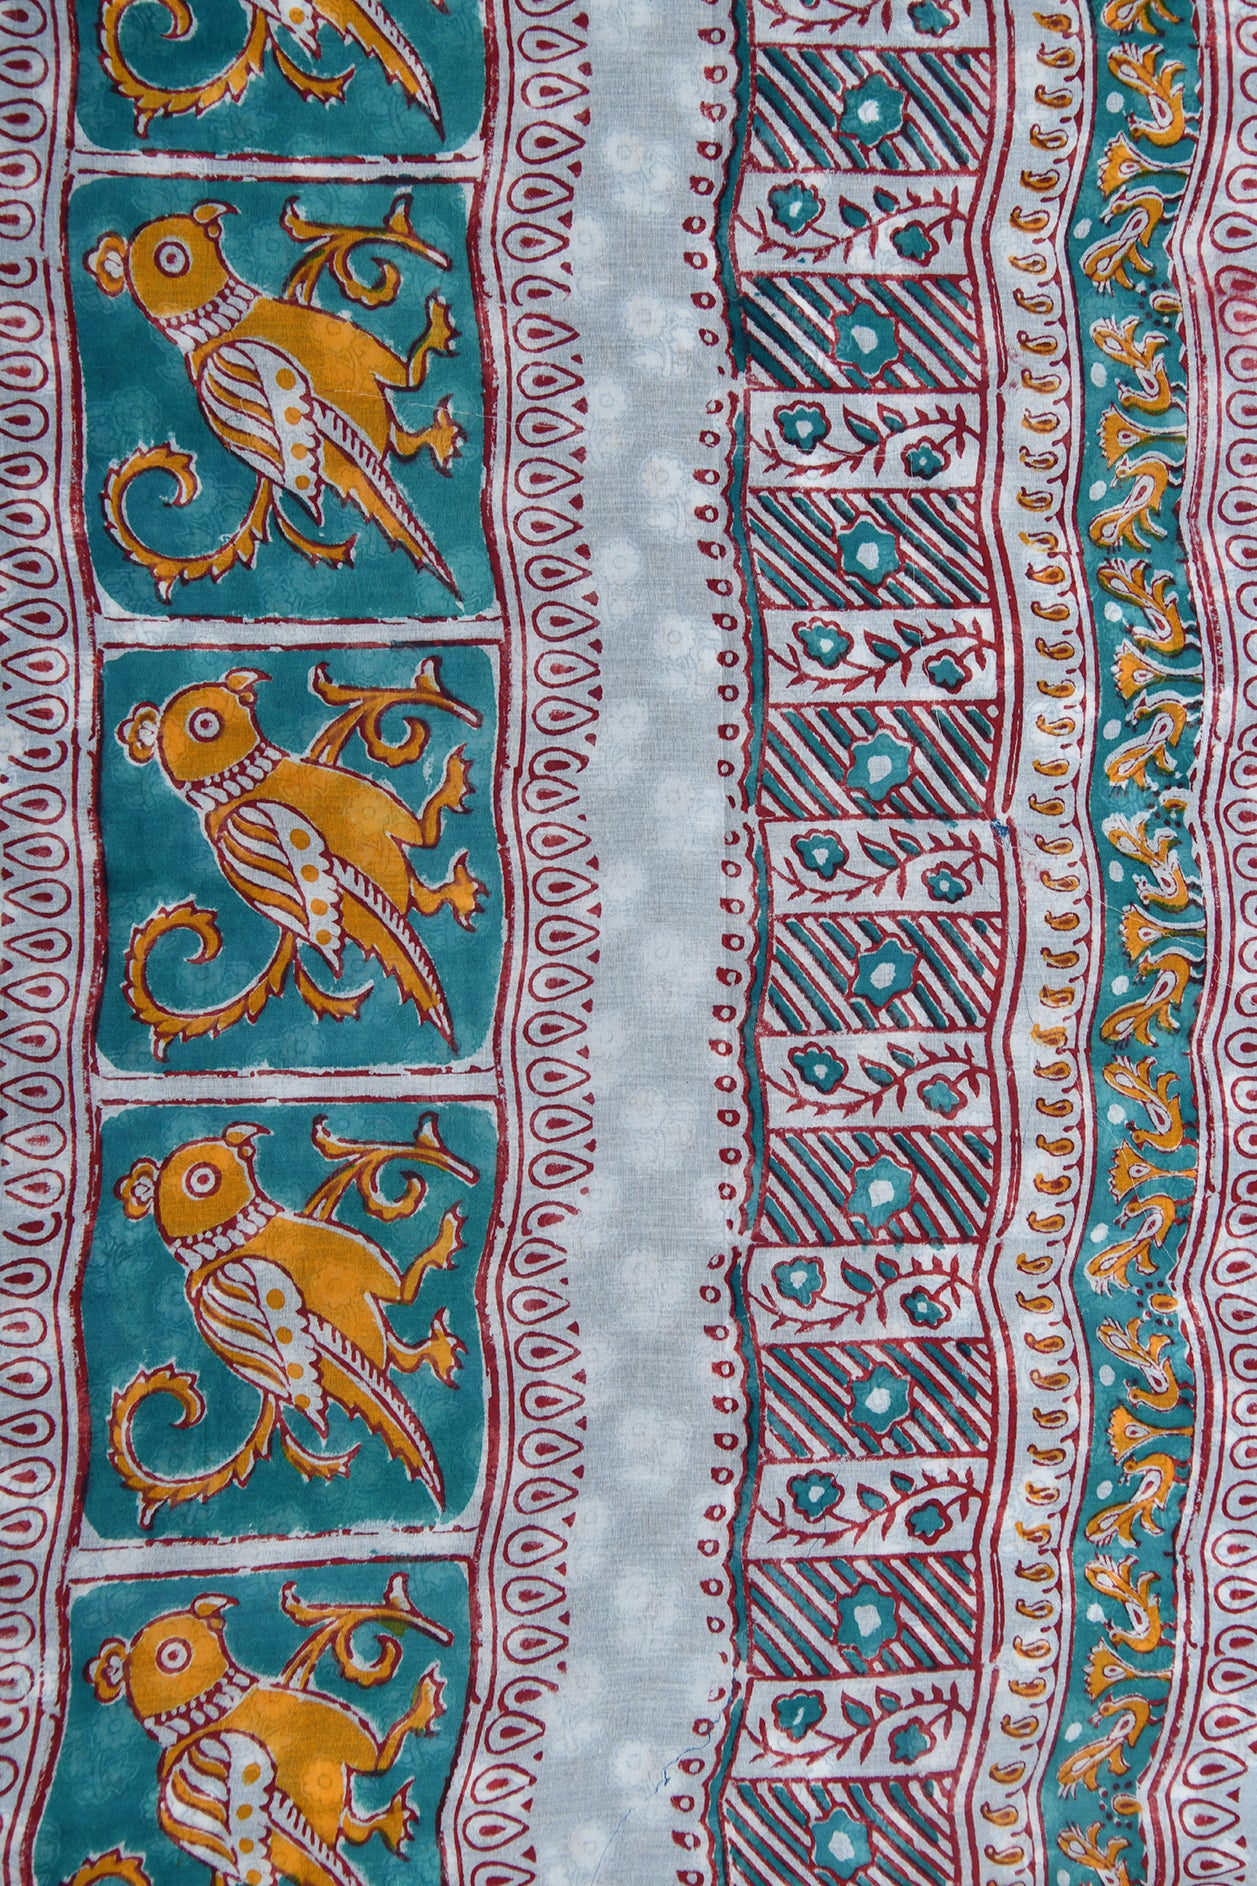 Small Floral Printed Aegean Blue Hyderabad Cotton Saree